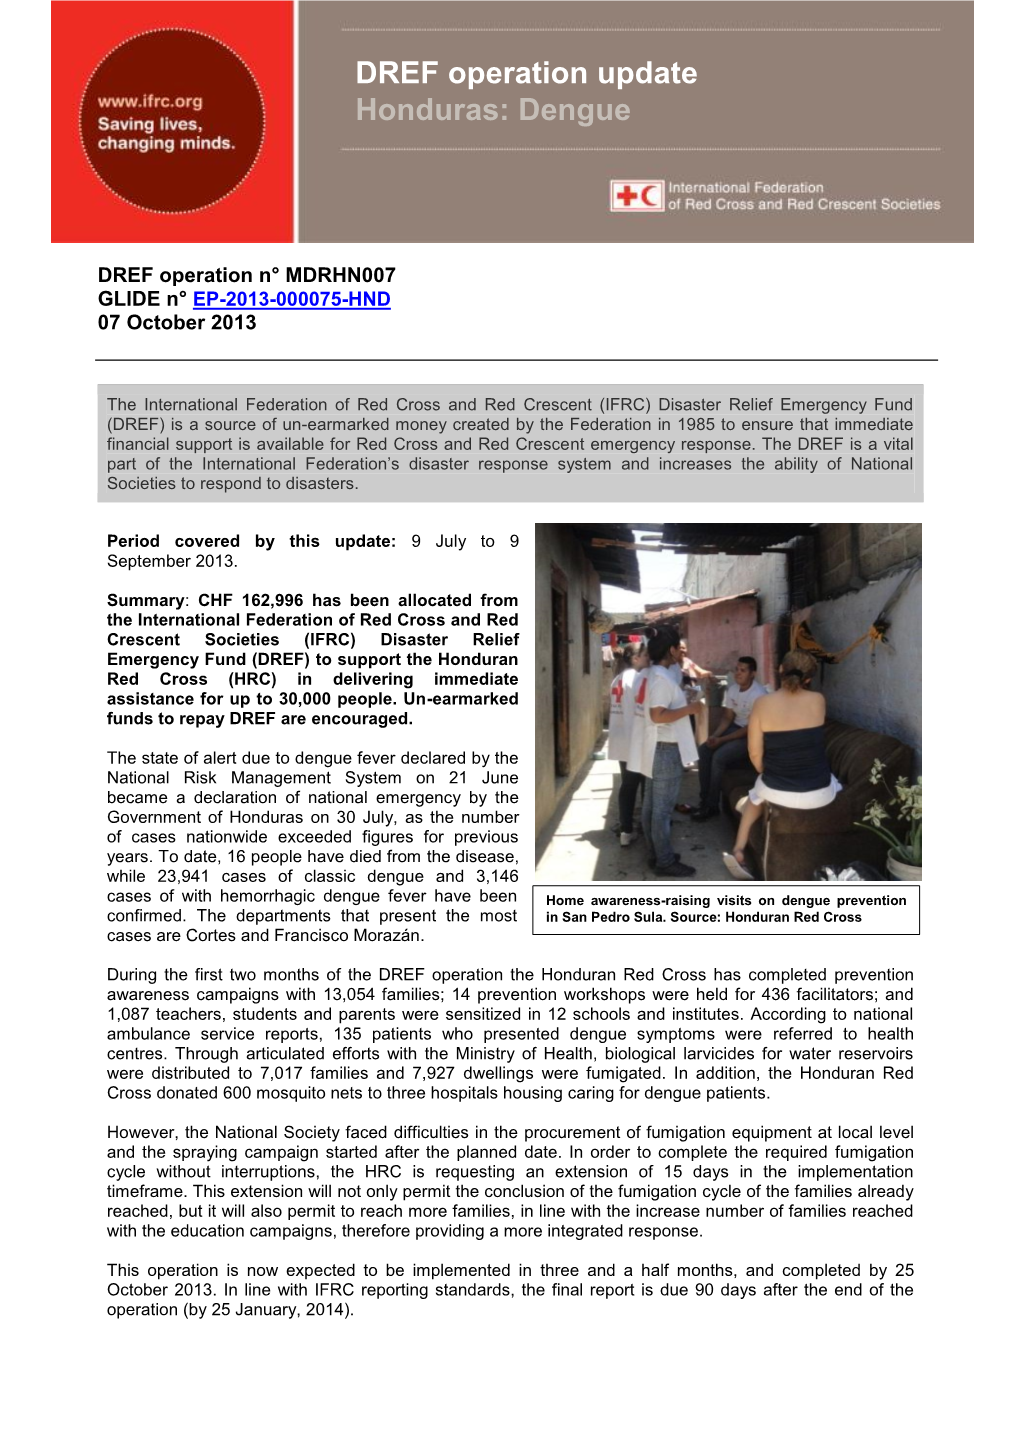 DREF Operation Update Honduras: Dengue